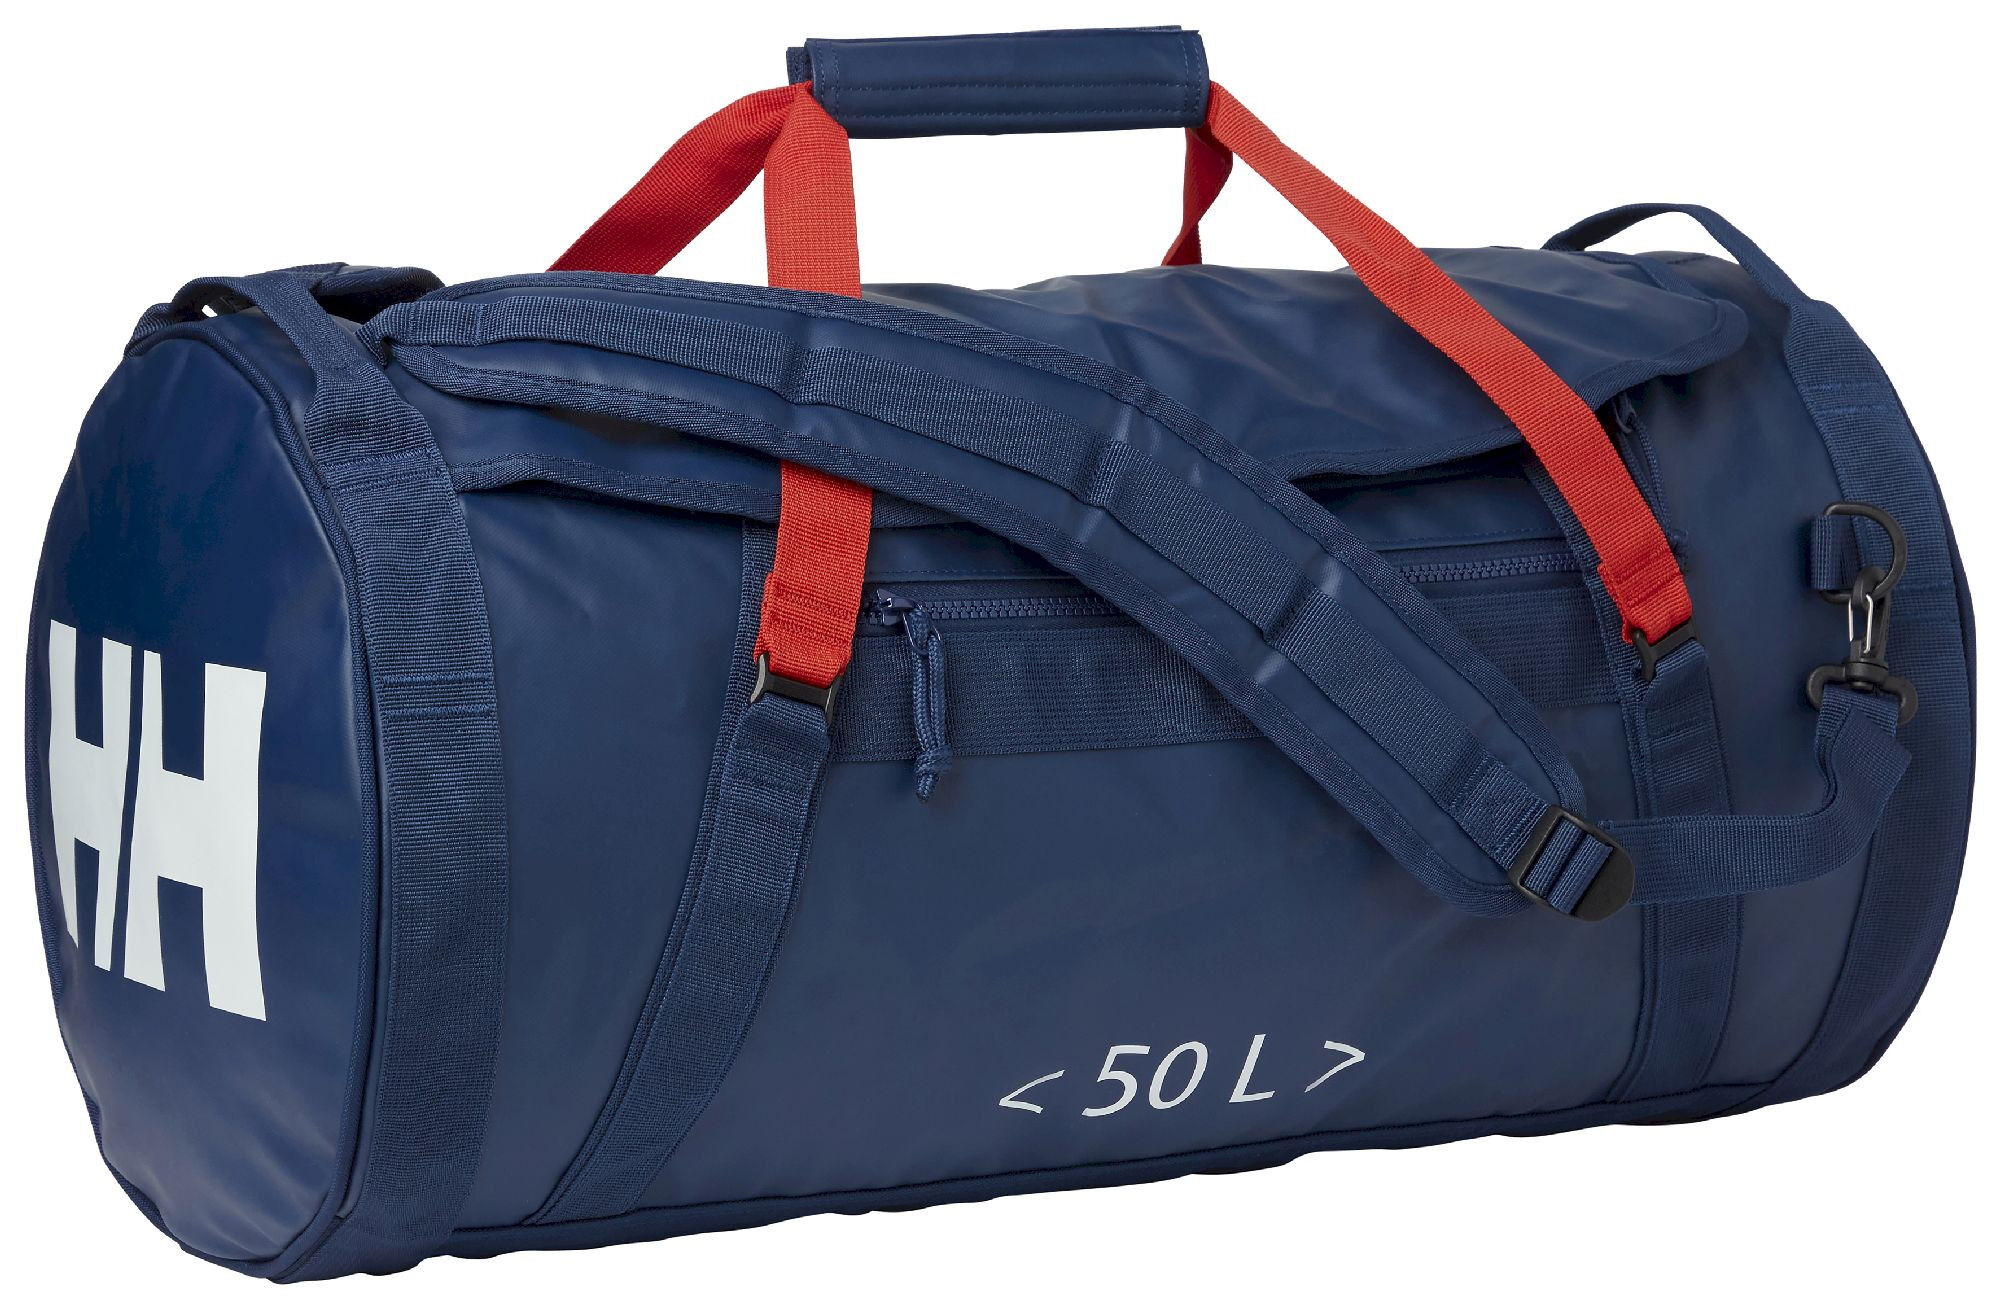 Helly Hansen HH Duffel Bag 2 50L - Travel bag